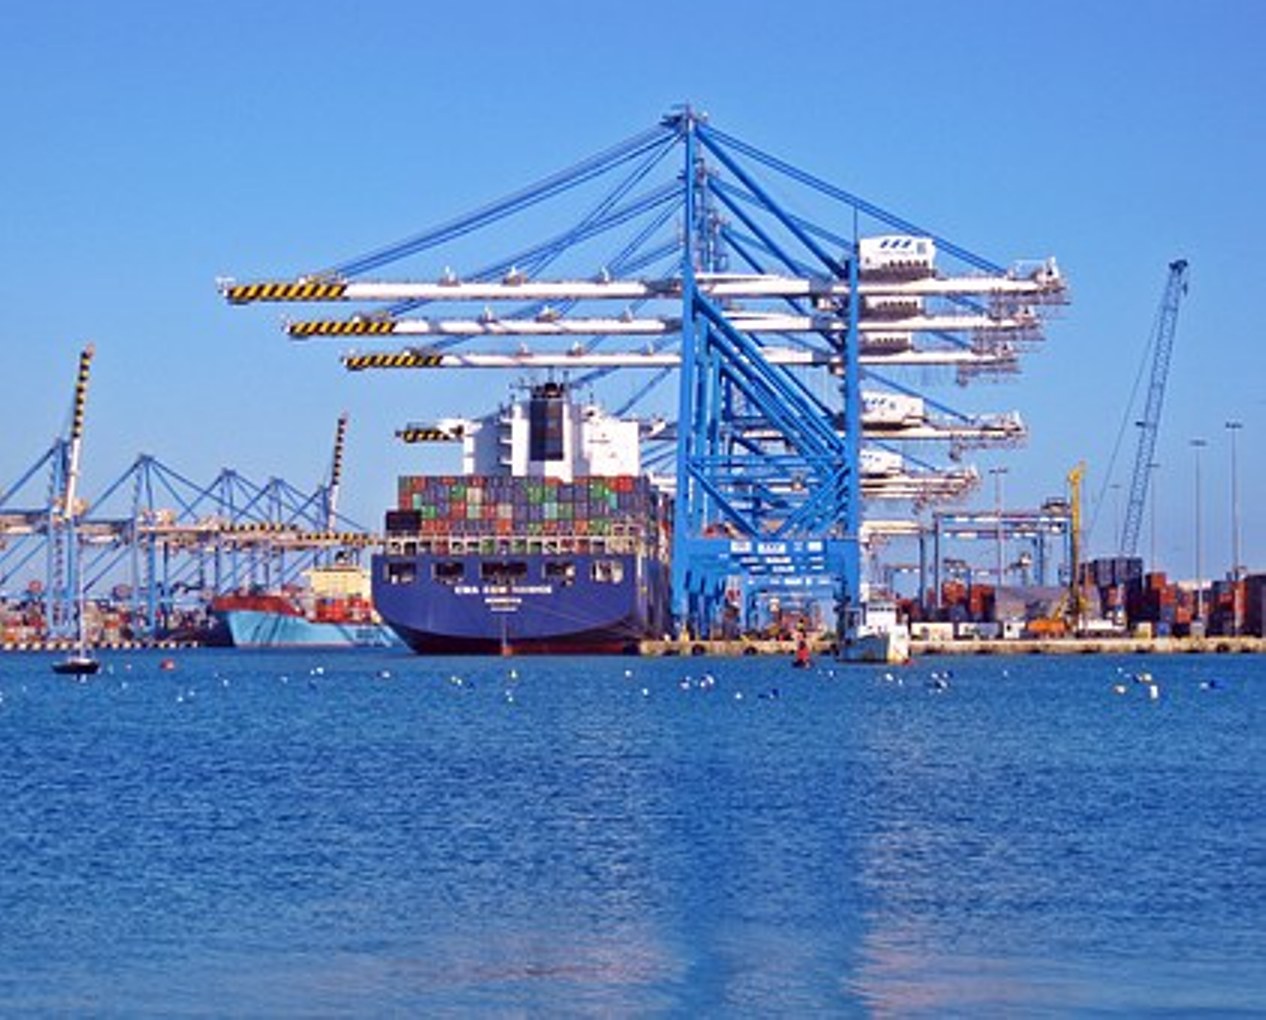 Cargo Ship at dock loading v2